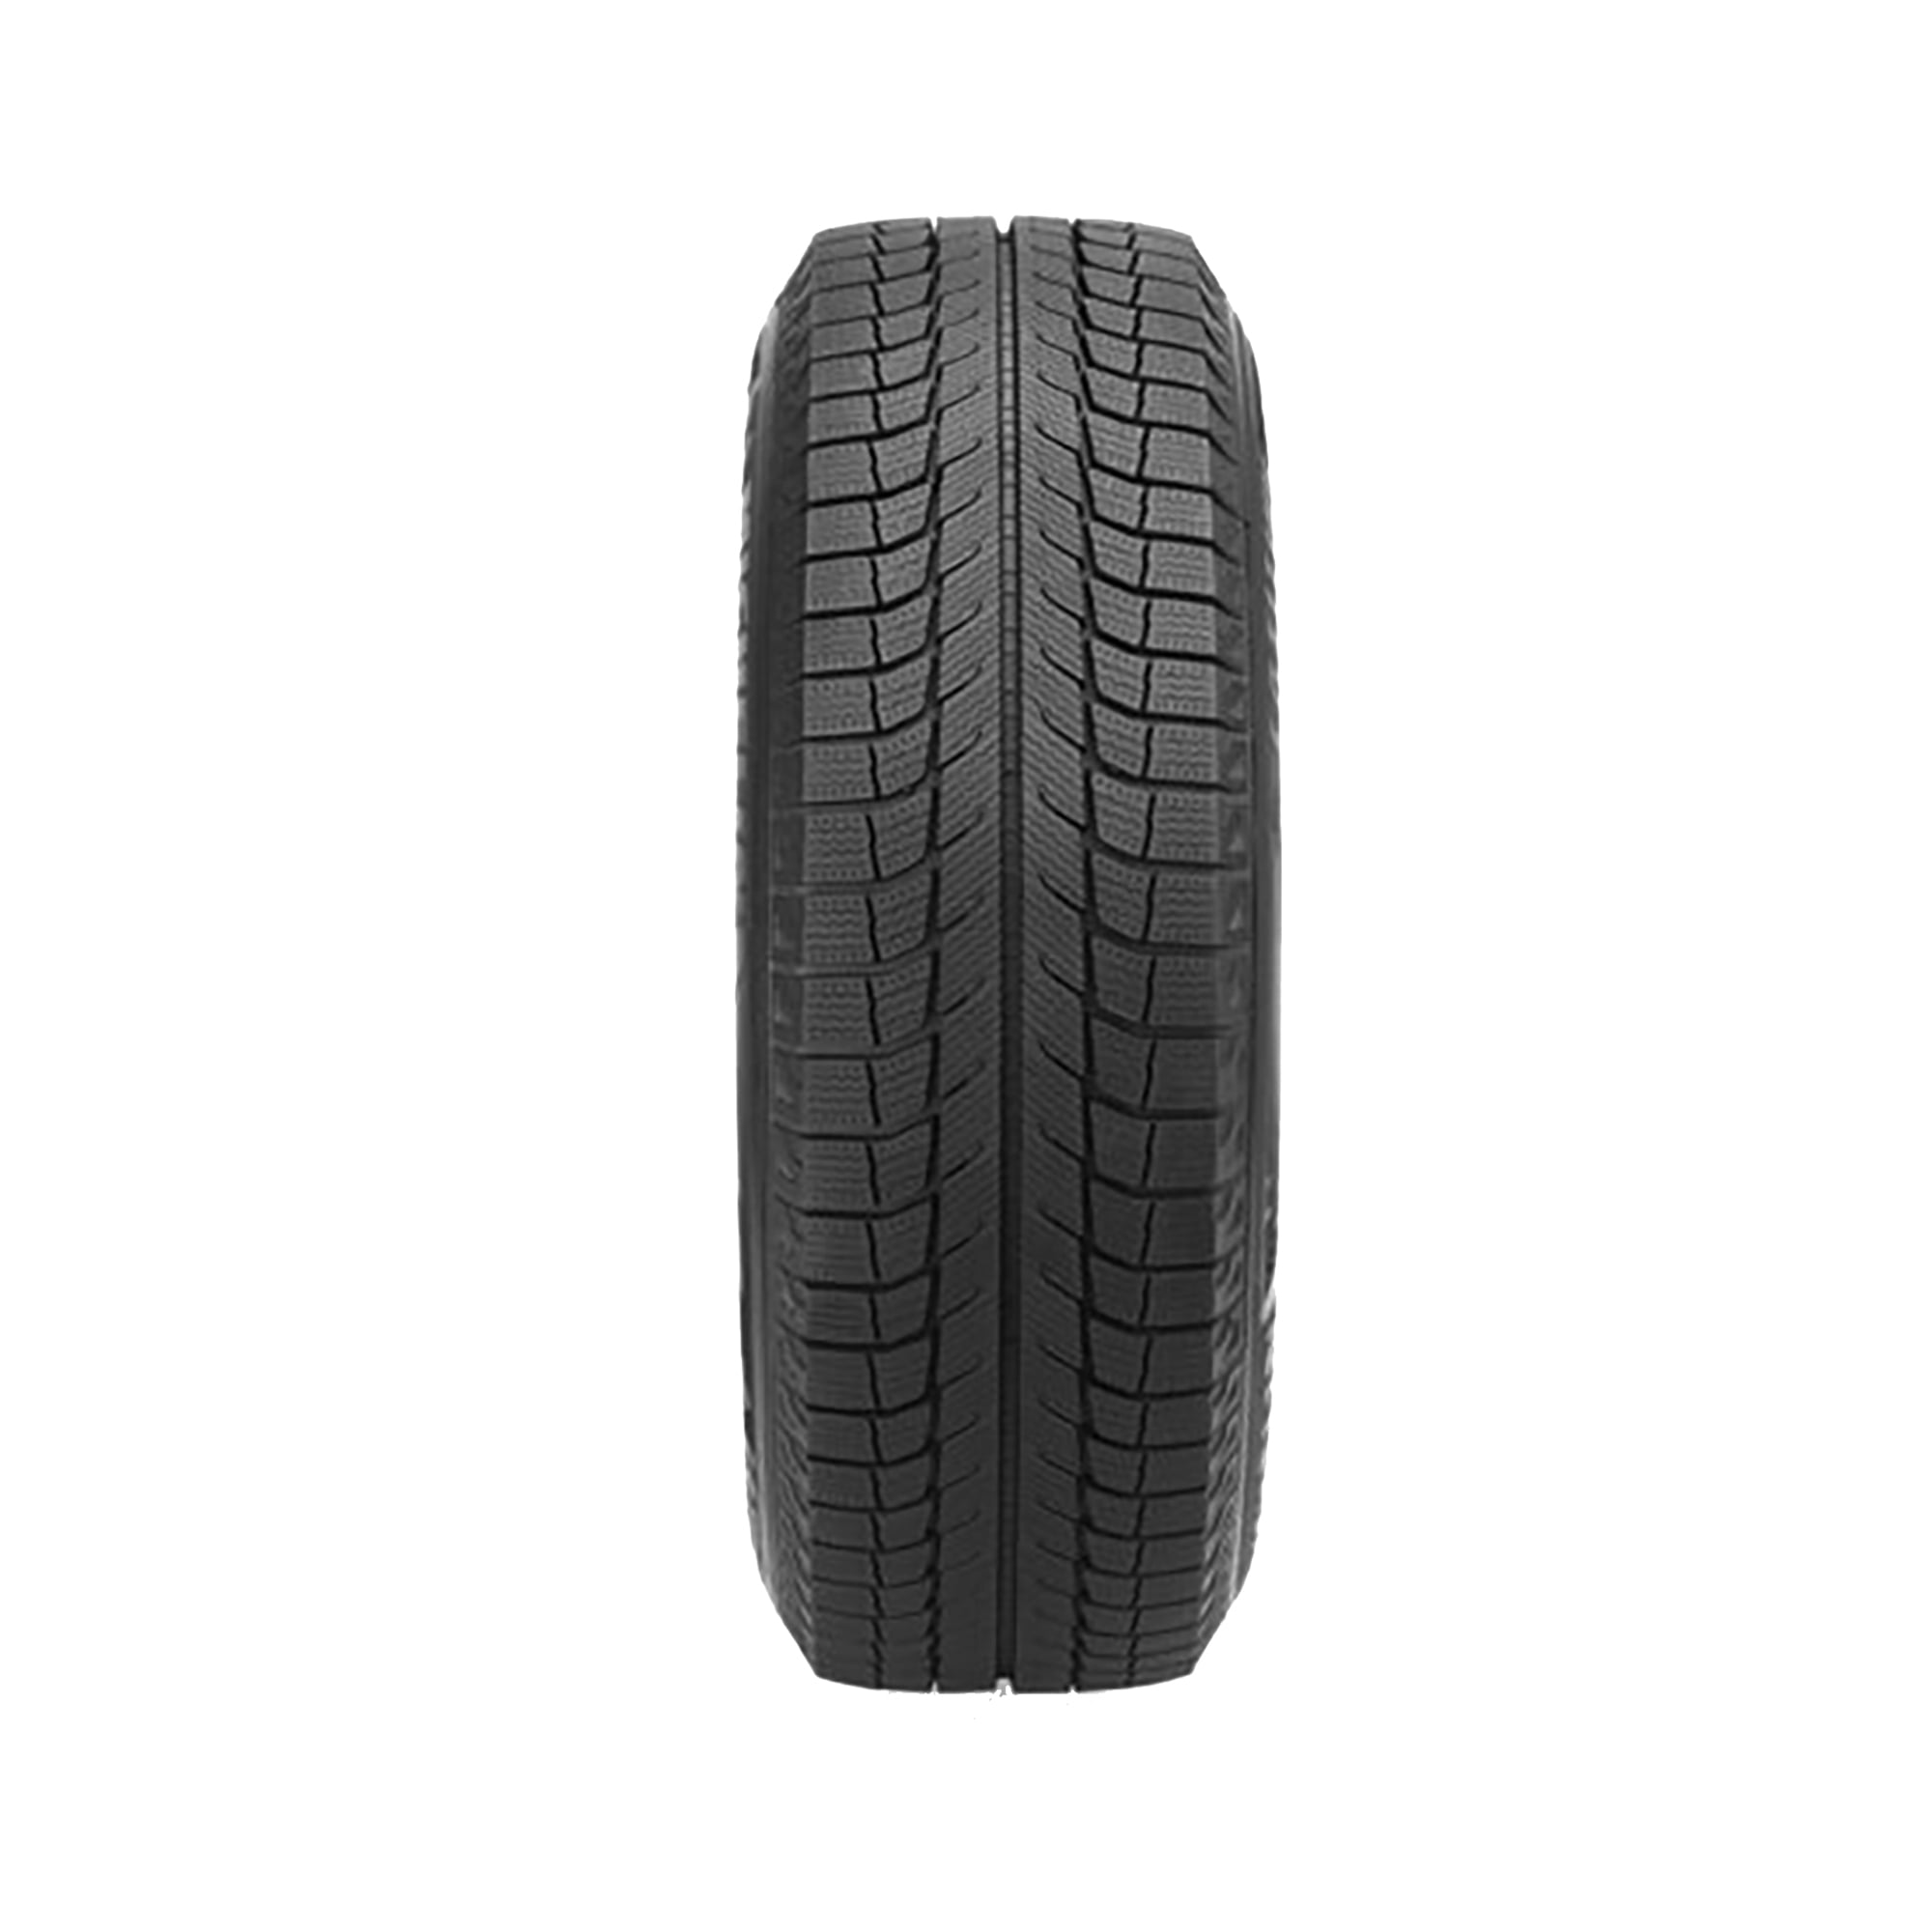 Michelin Latitude X-Ice Xi2 265/70R17 115 T Tire - Walmart.com